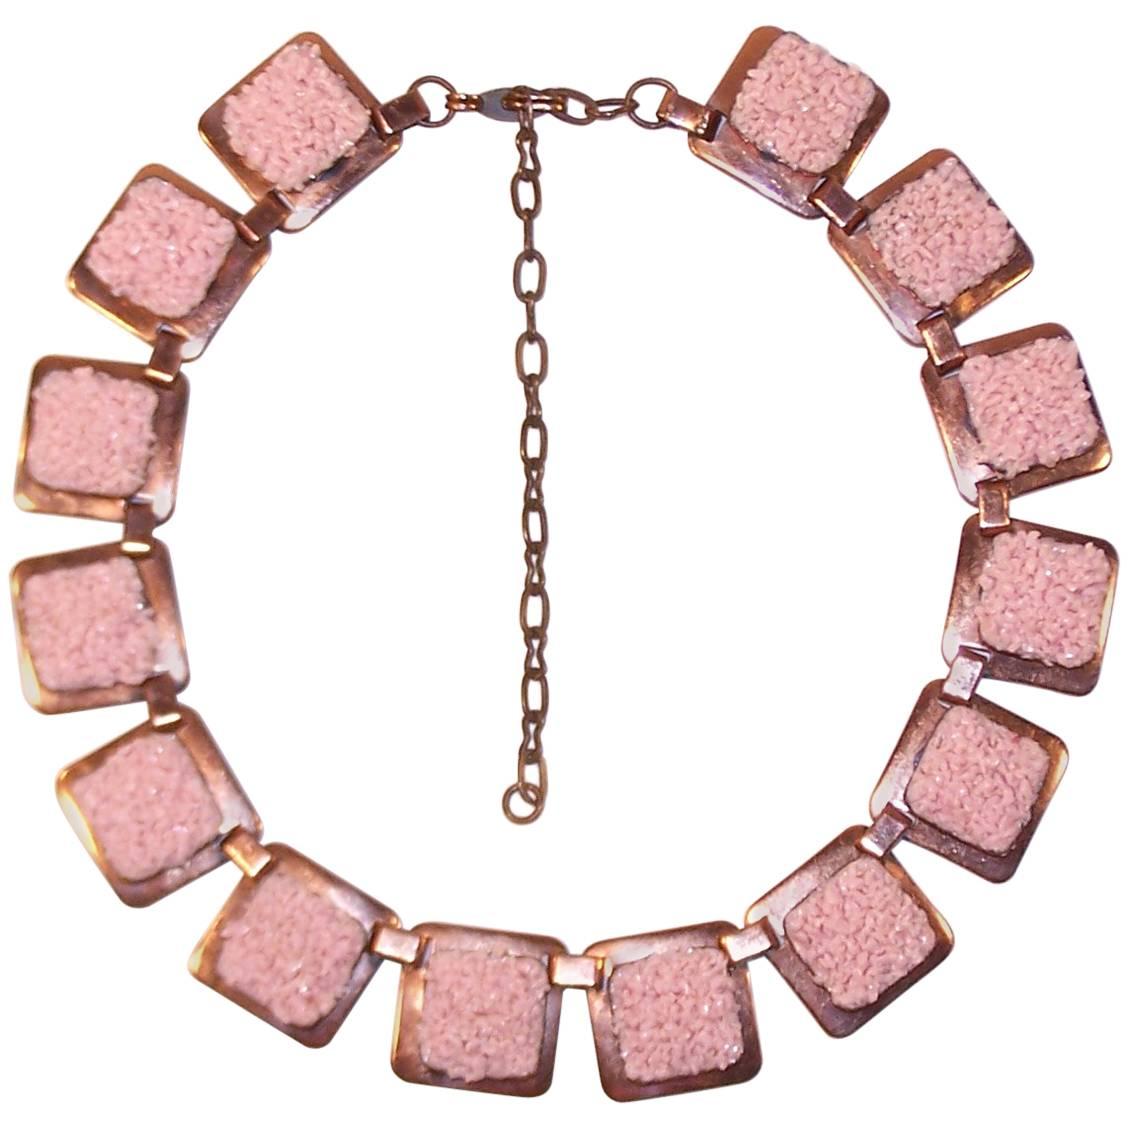 1950's Matisse Copper & Pink Pebble Enamel Choker Style Necklace